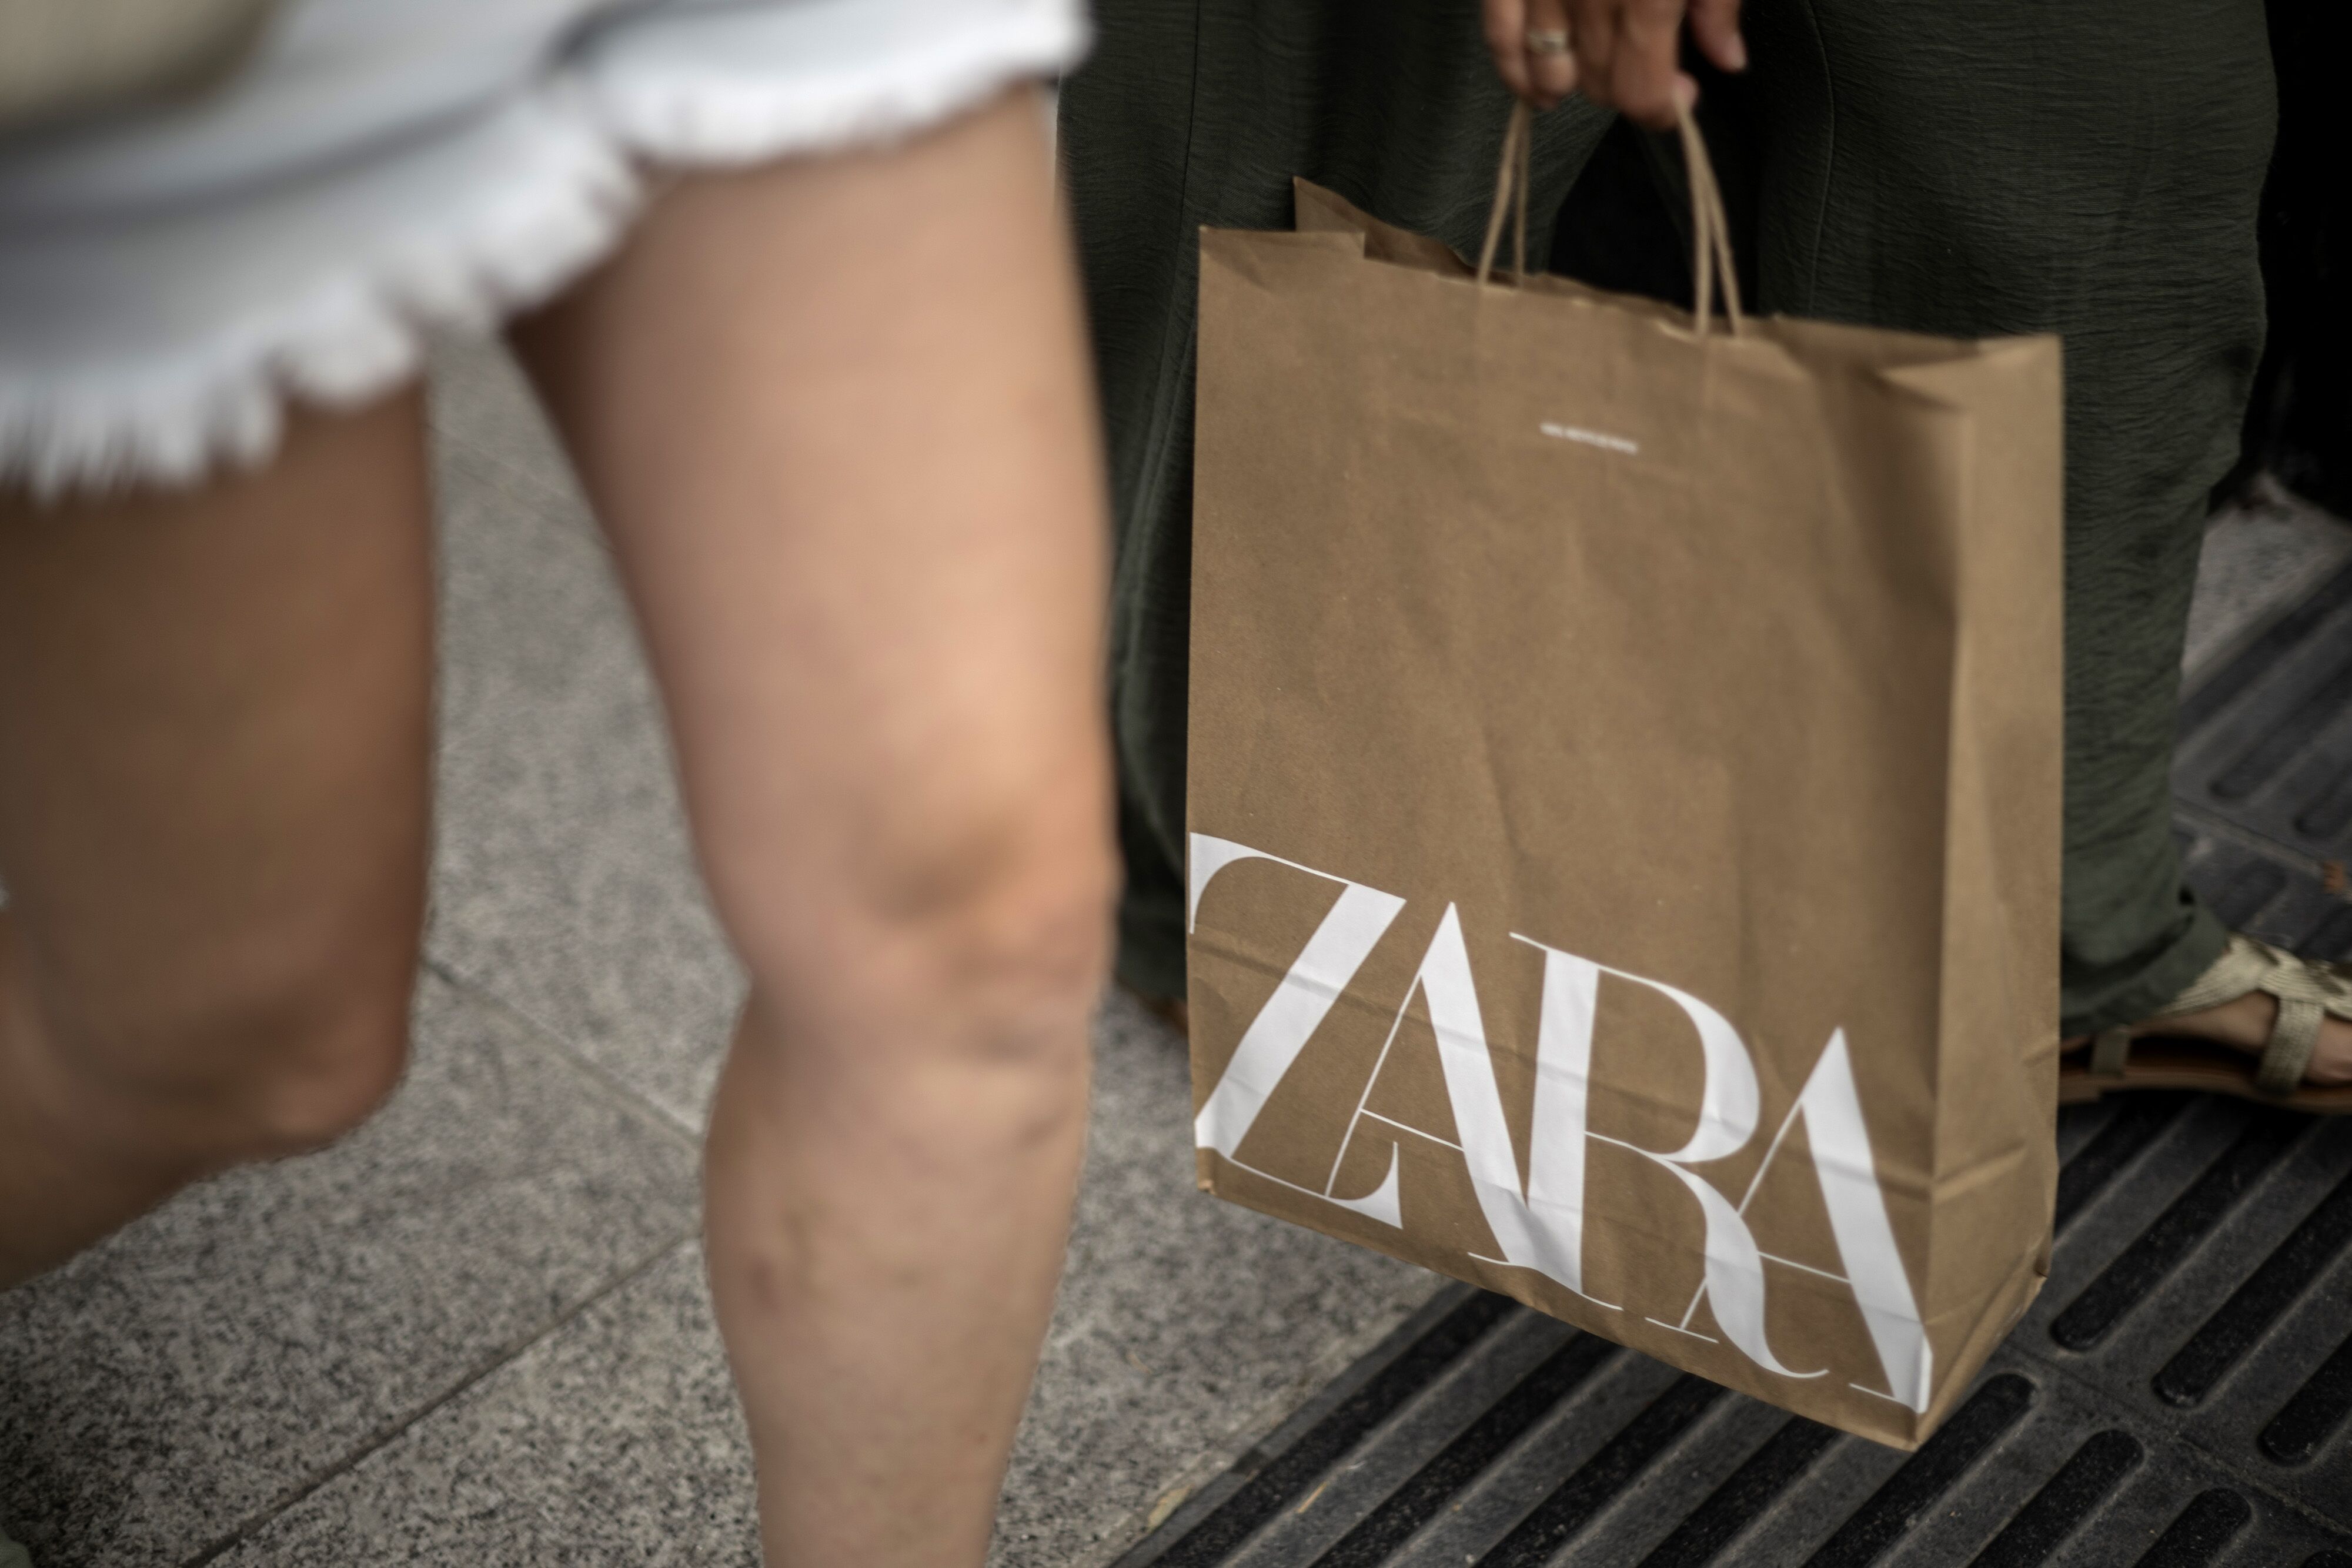 Zara's owner reports surging sales despite cost of living pressures, Zara